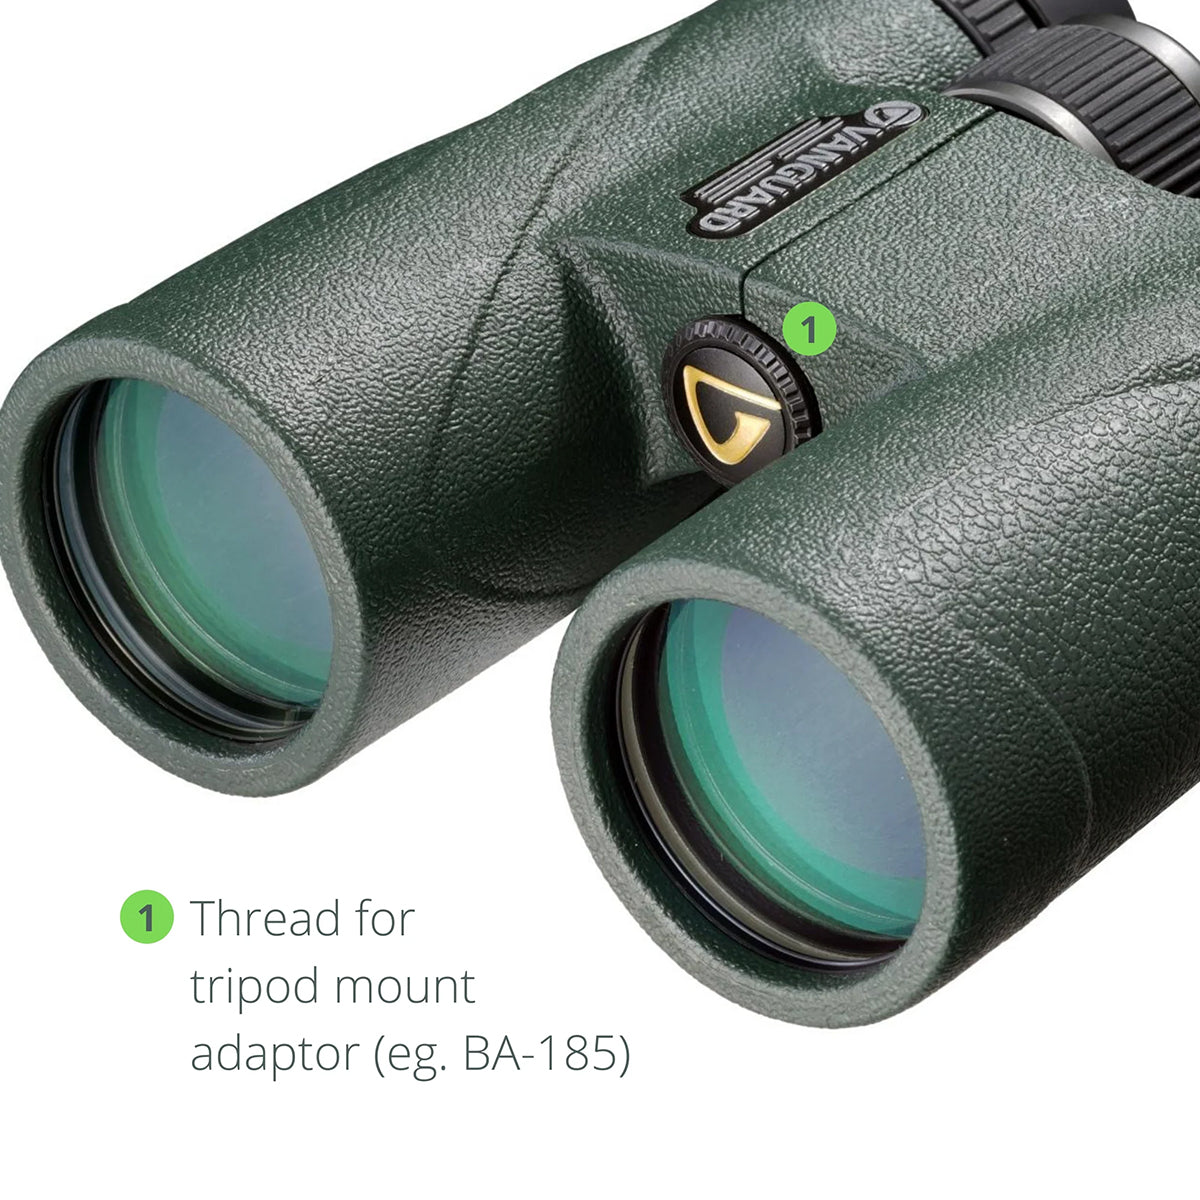 Vanguard VEO ED 1042 10x42 ED Strong, Durable, Lightweight Glass Binoculars